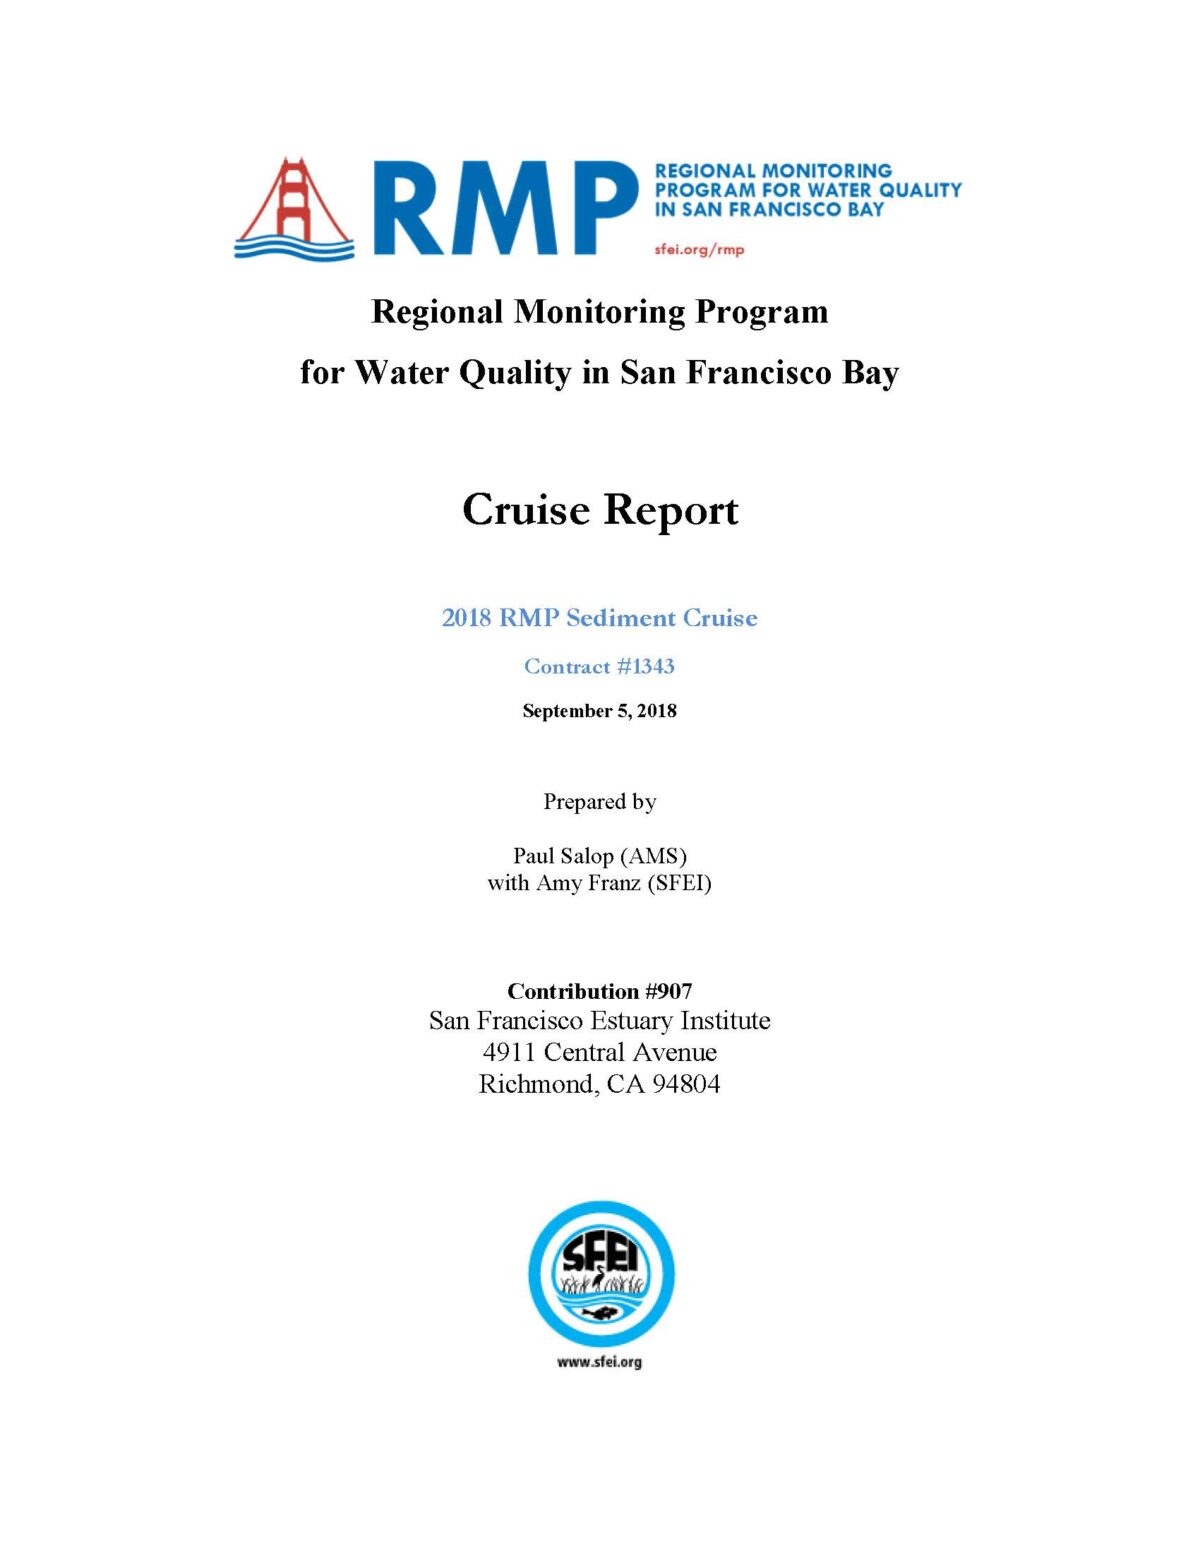 2018 Regional Monitoring Program (RMP) Sediment Cruise Report